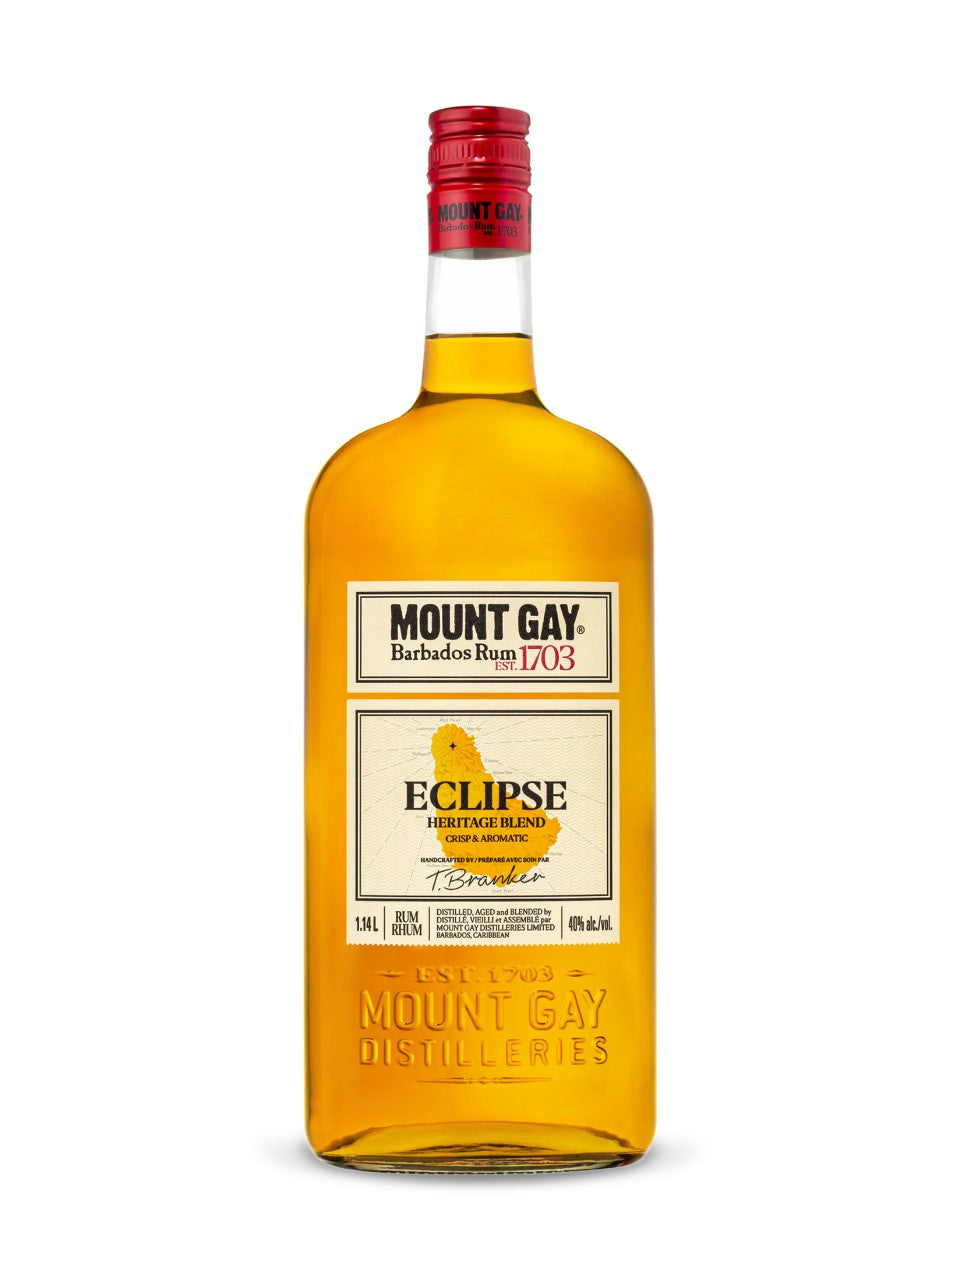 Mount Gay Eclipse Rum 1140 mL bottle